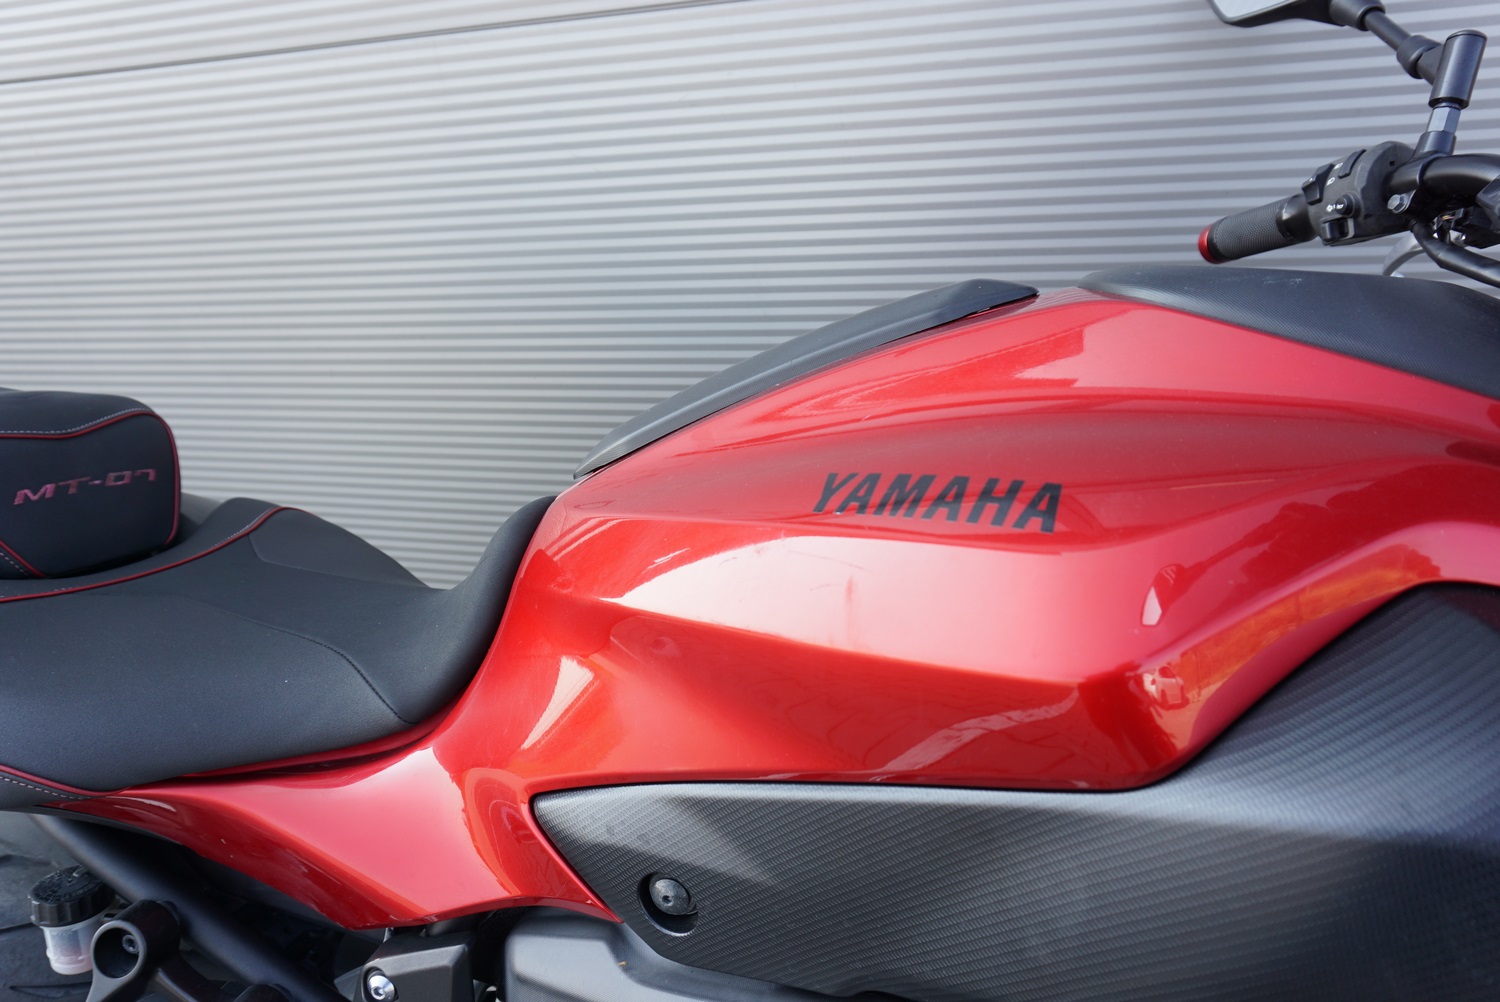 Yamaha MT 07